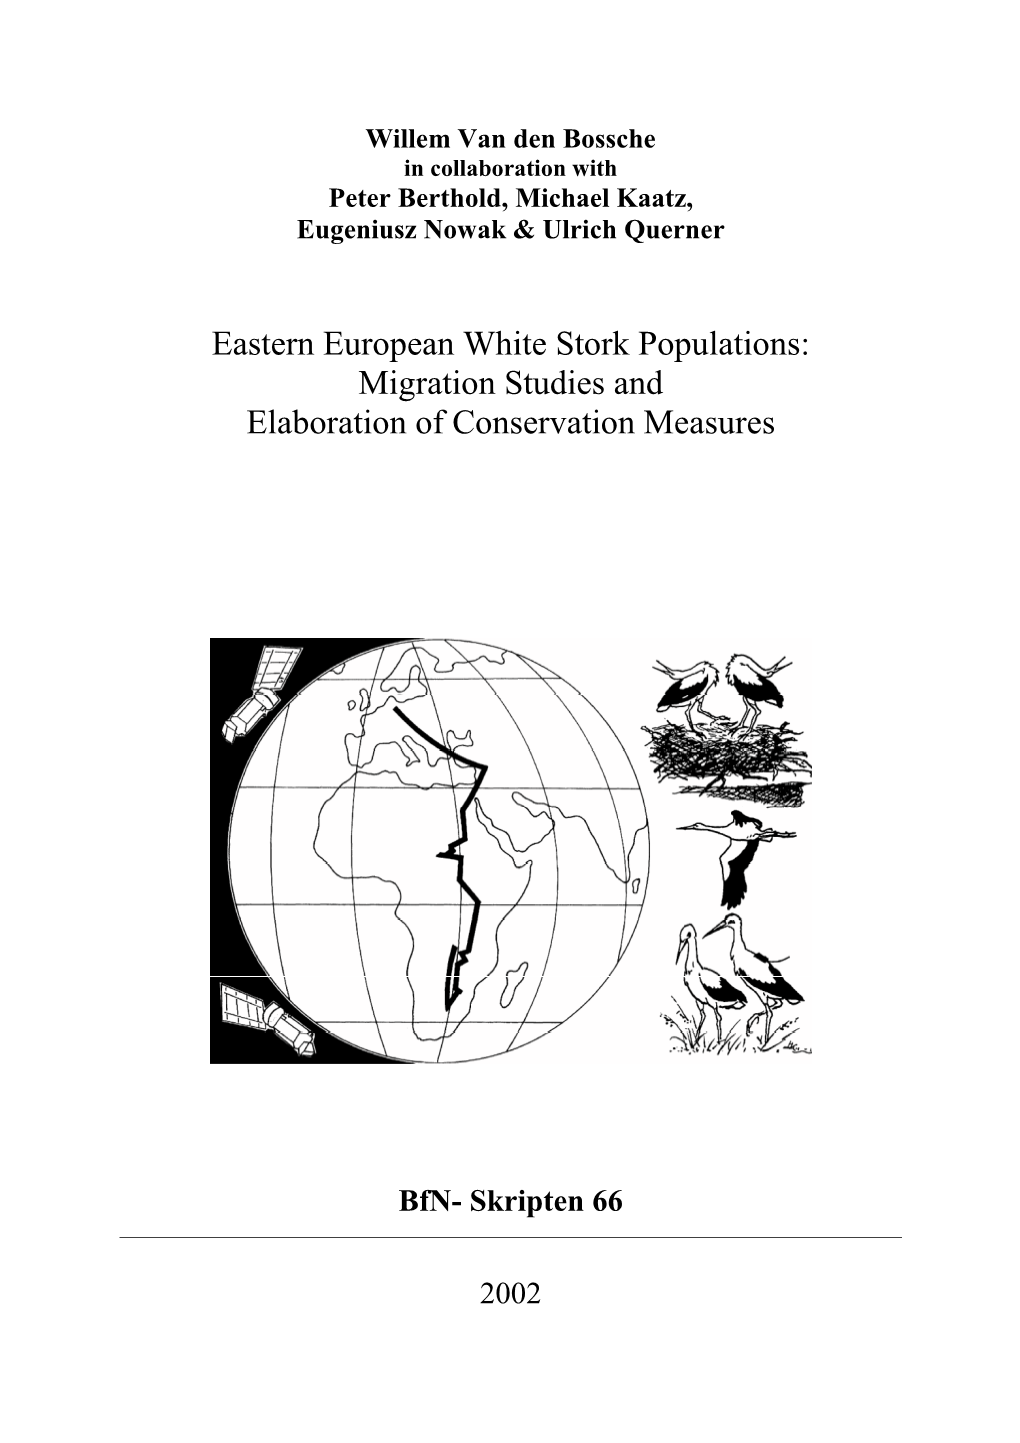 Eastern European White Stork Populations: Migration Studies and Elaboration of Conservation Measures